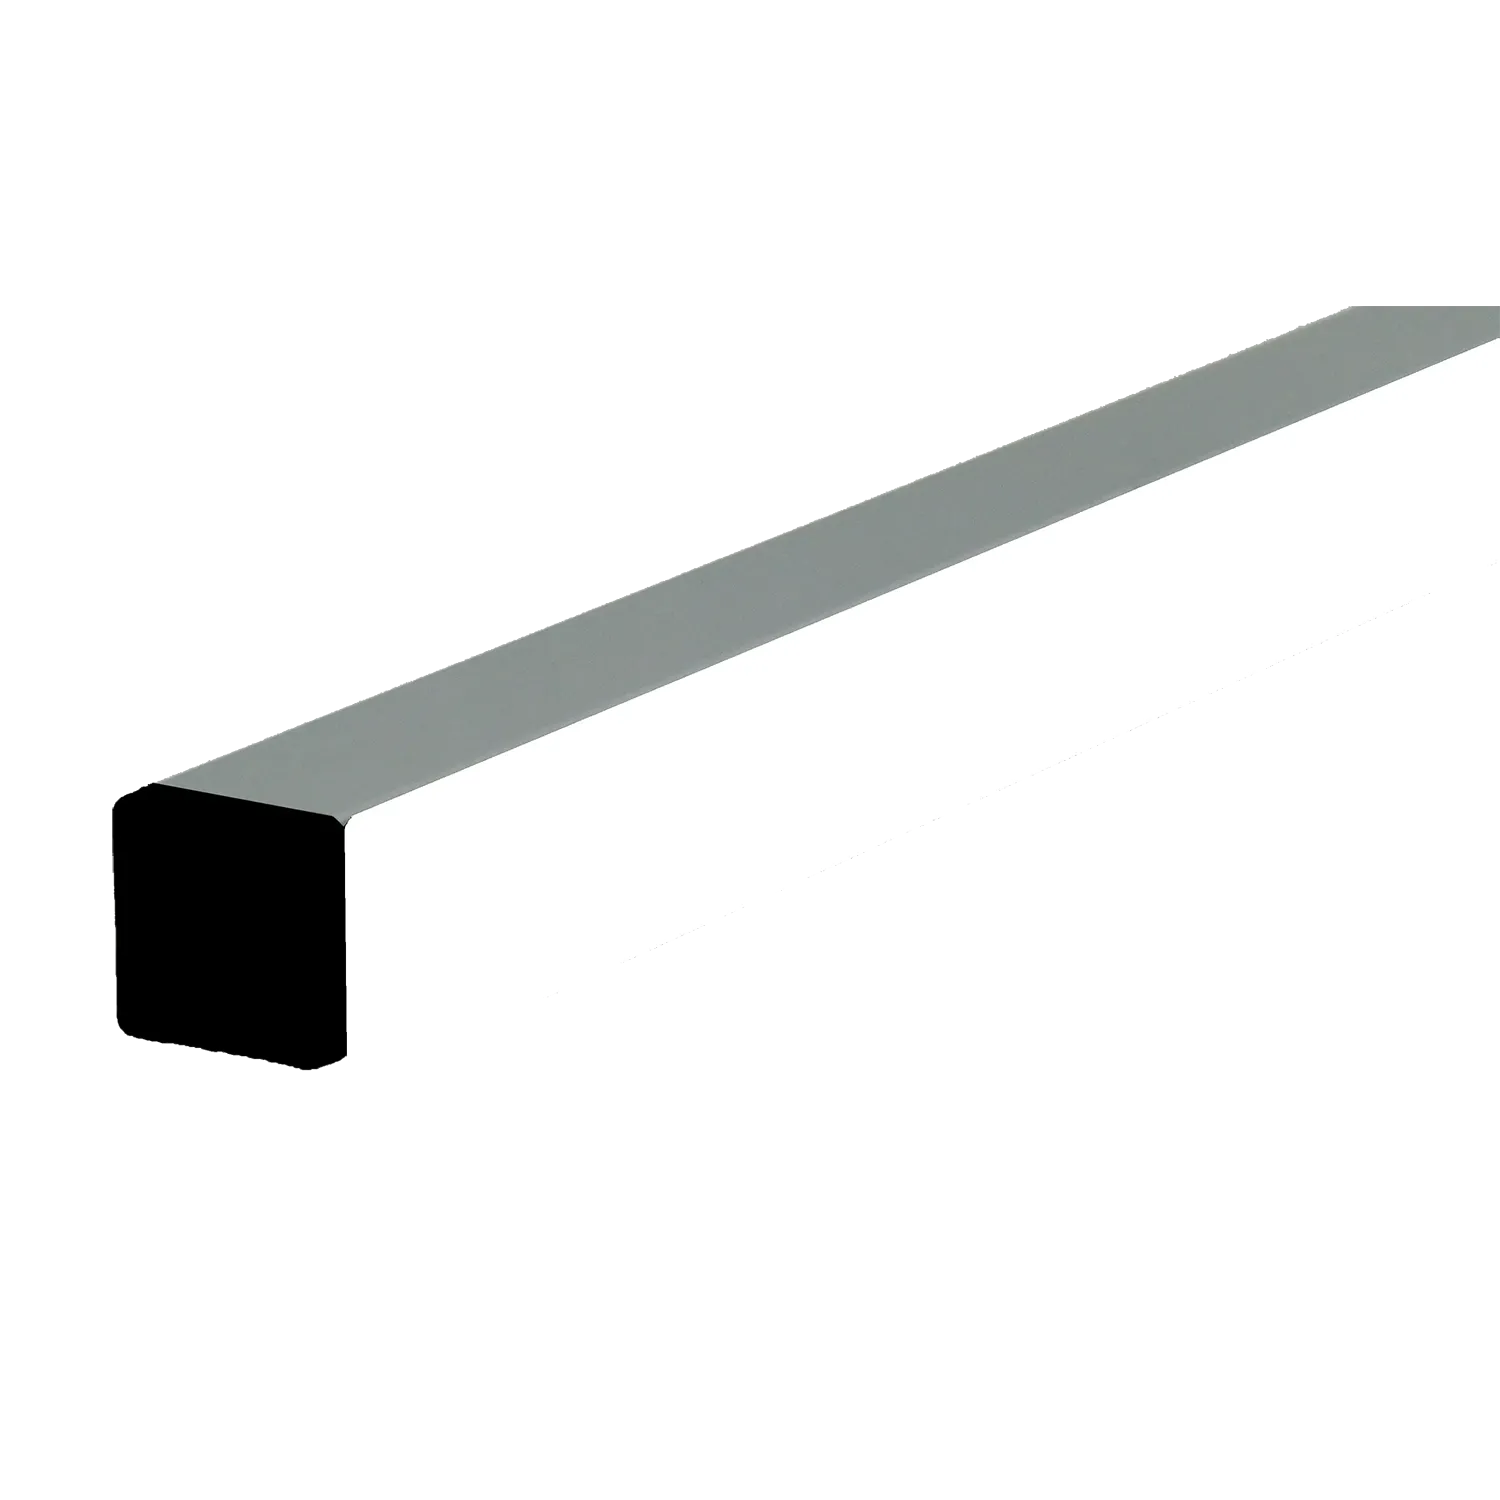 24mm Aluminum Rail with White Wear Strip